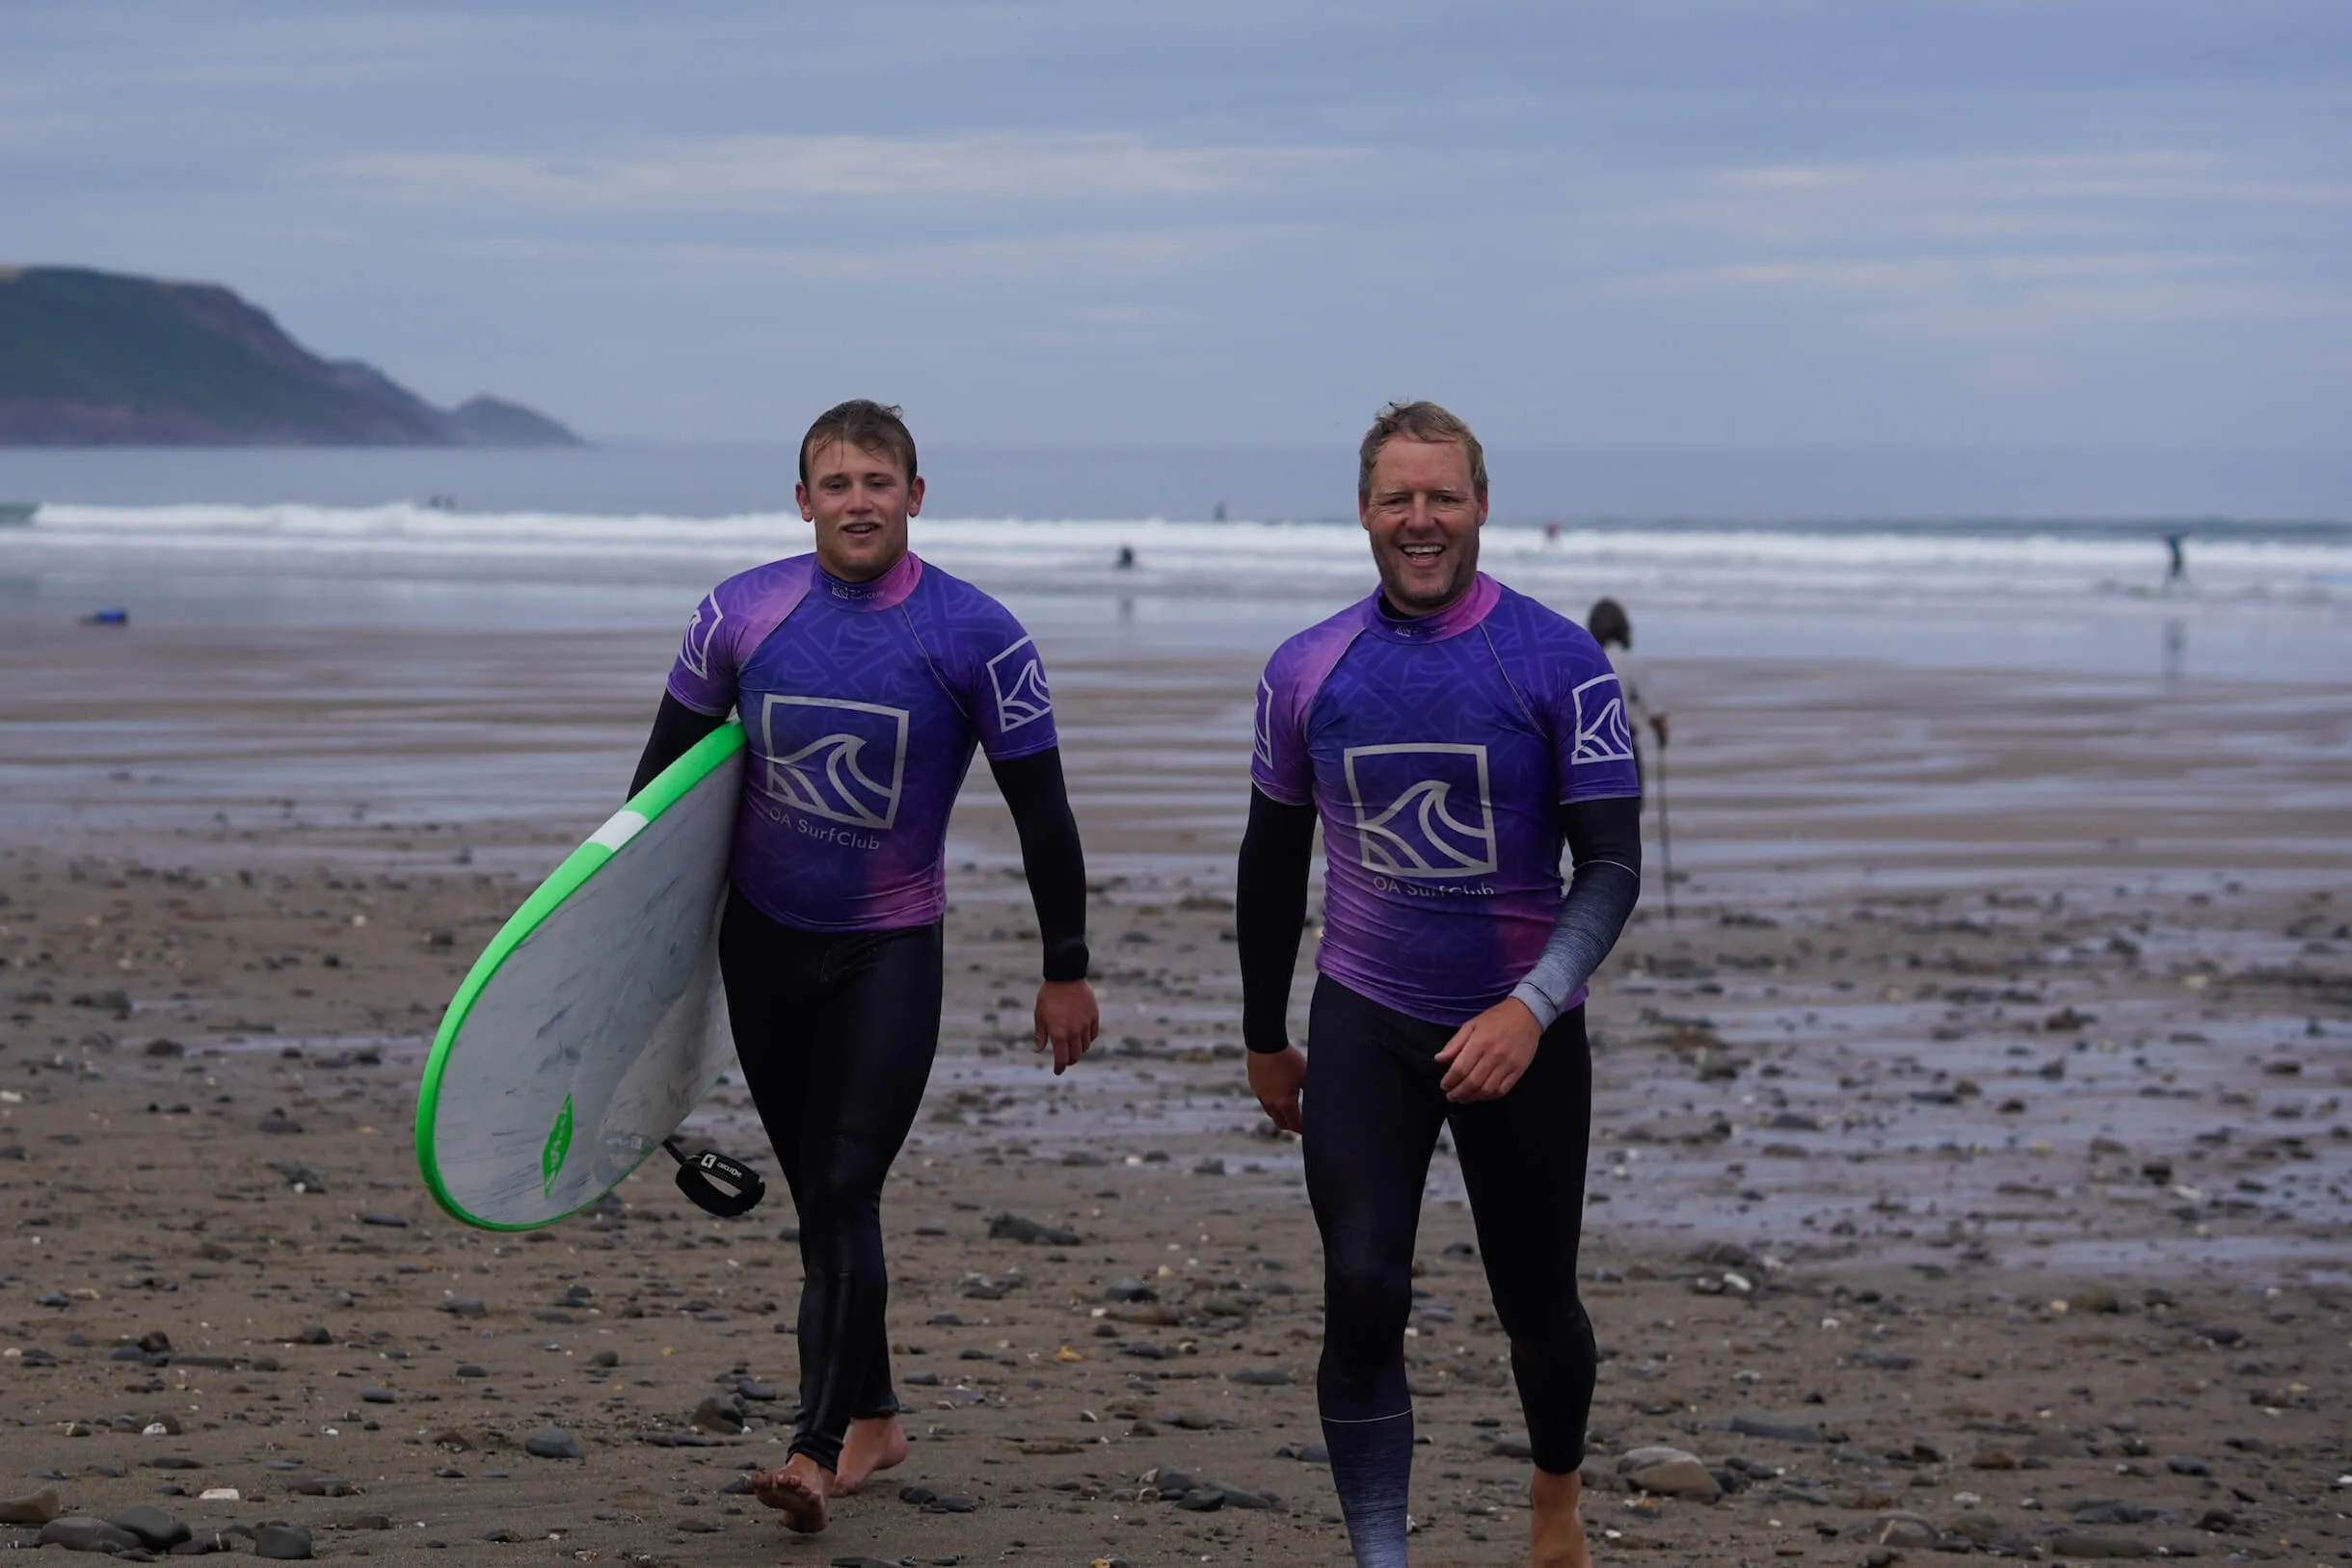 oa surf club team walking up the beach at Widemouth Bay